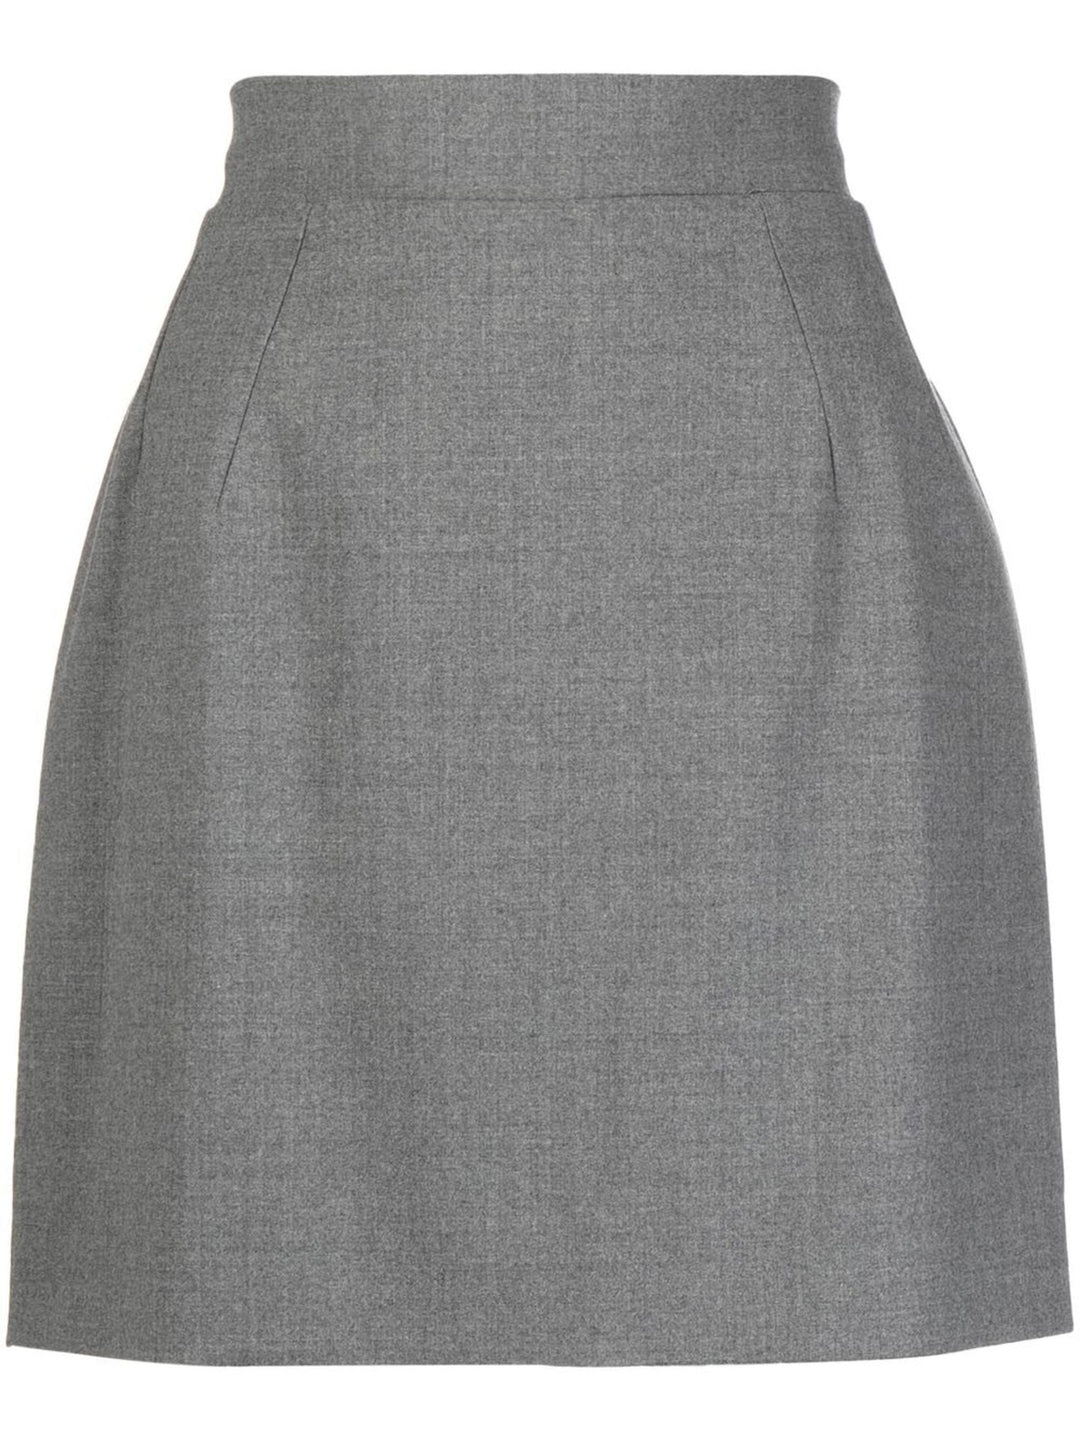 Couture Edit Mini Skirt